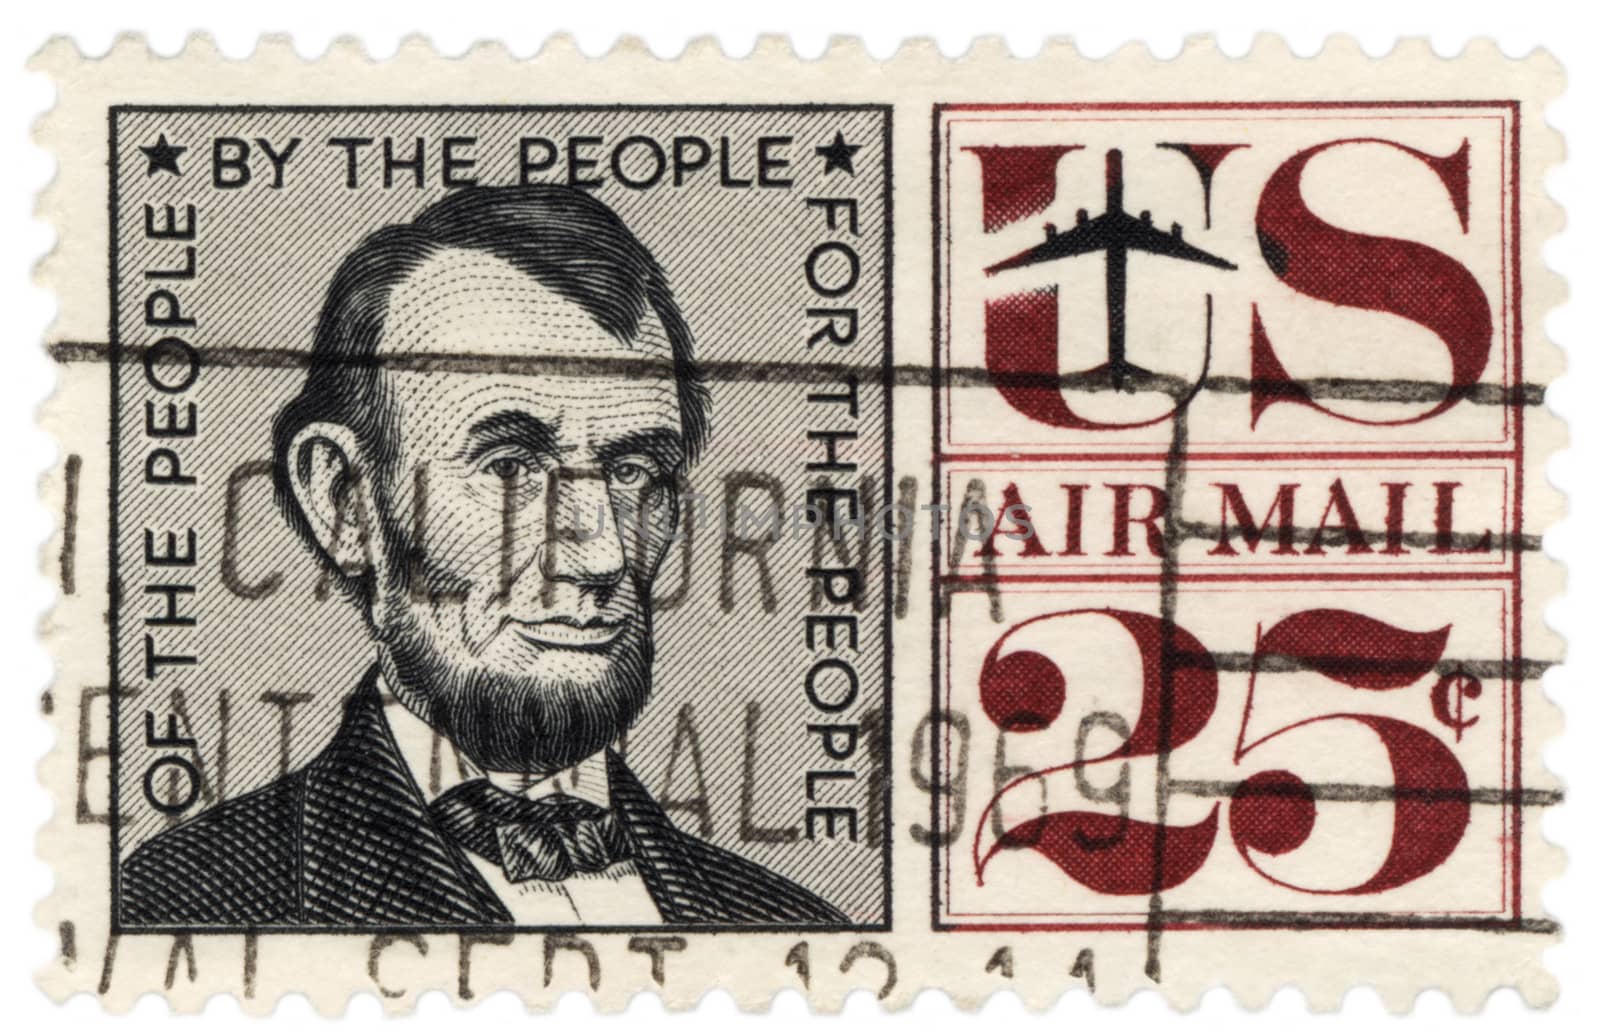 USA - CIRCA 1959: A stamp printed in USA shows U.S. President Abraham Lincoln (1809-1865), circa 1959